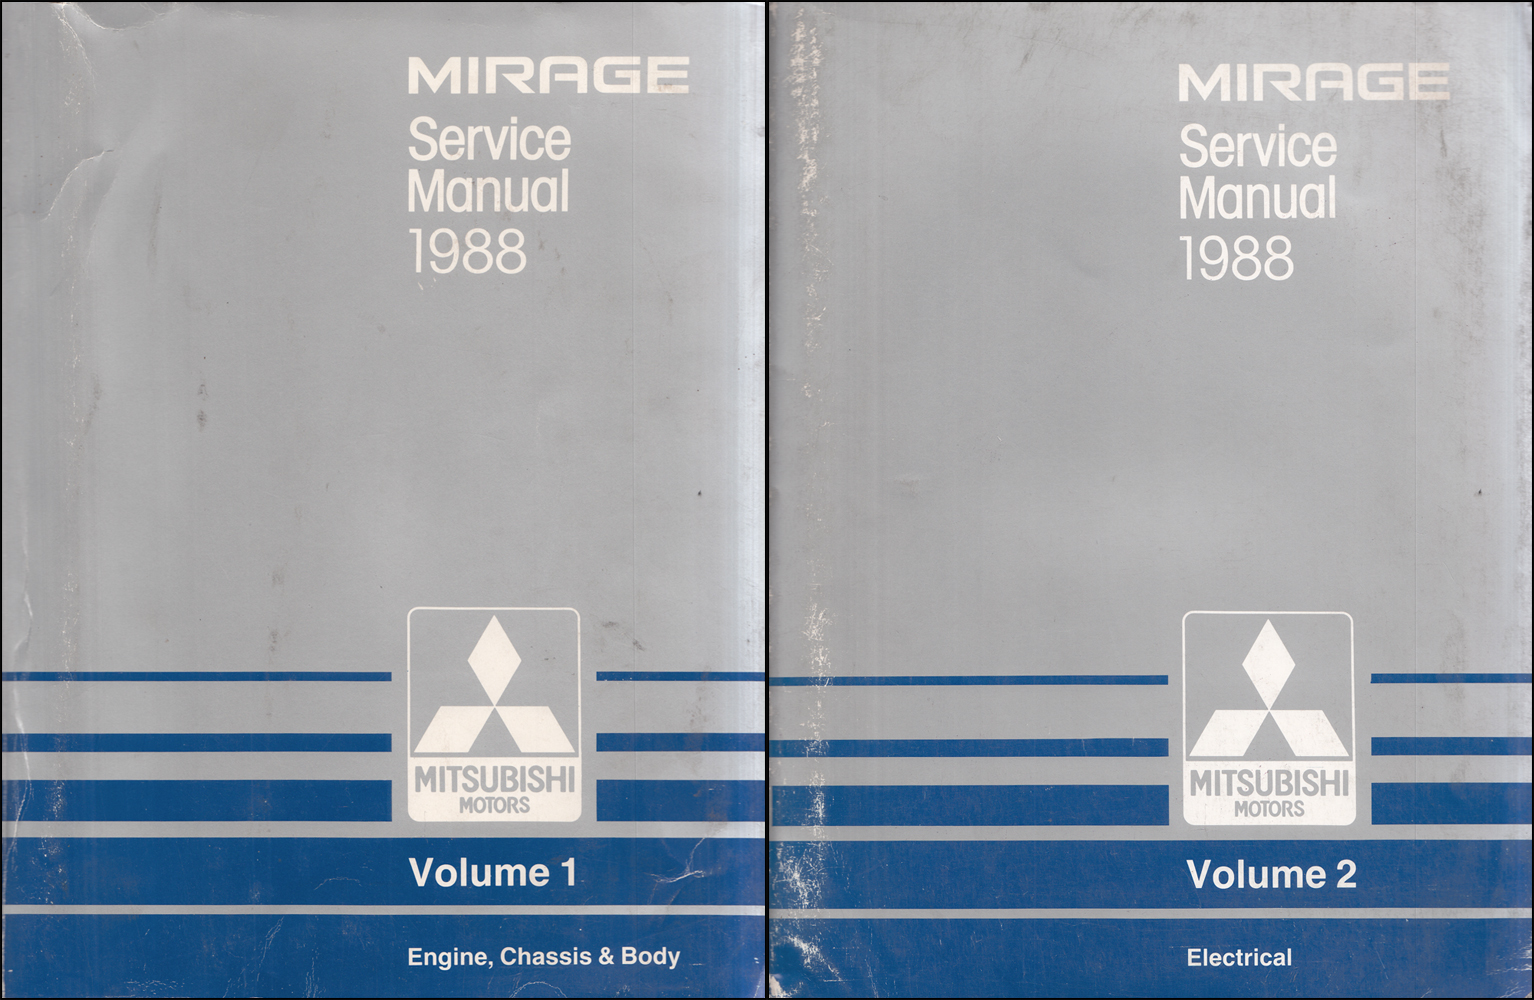 1988 Mitsubishi Mirage Repair Manual 2-Volume Set Original